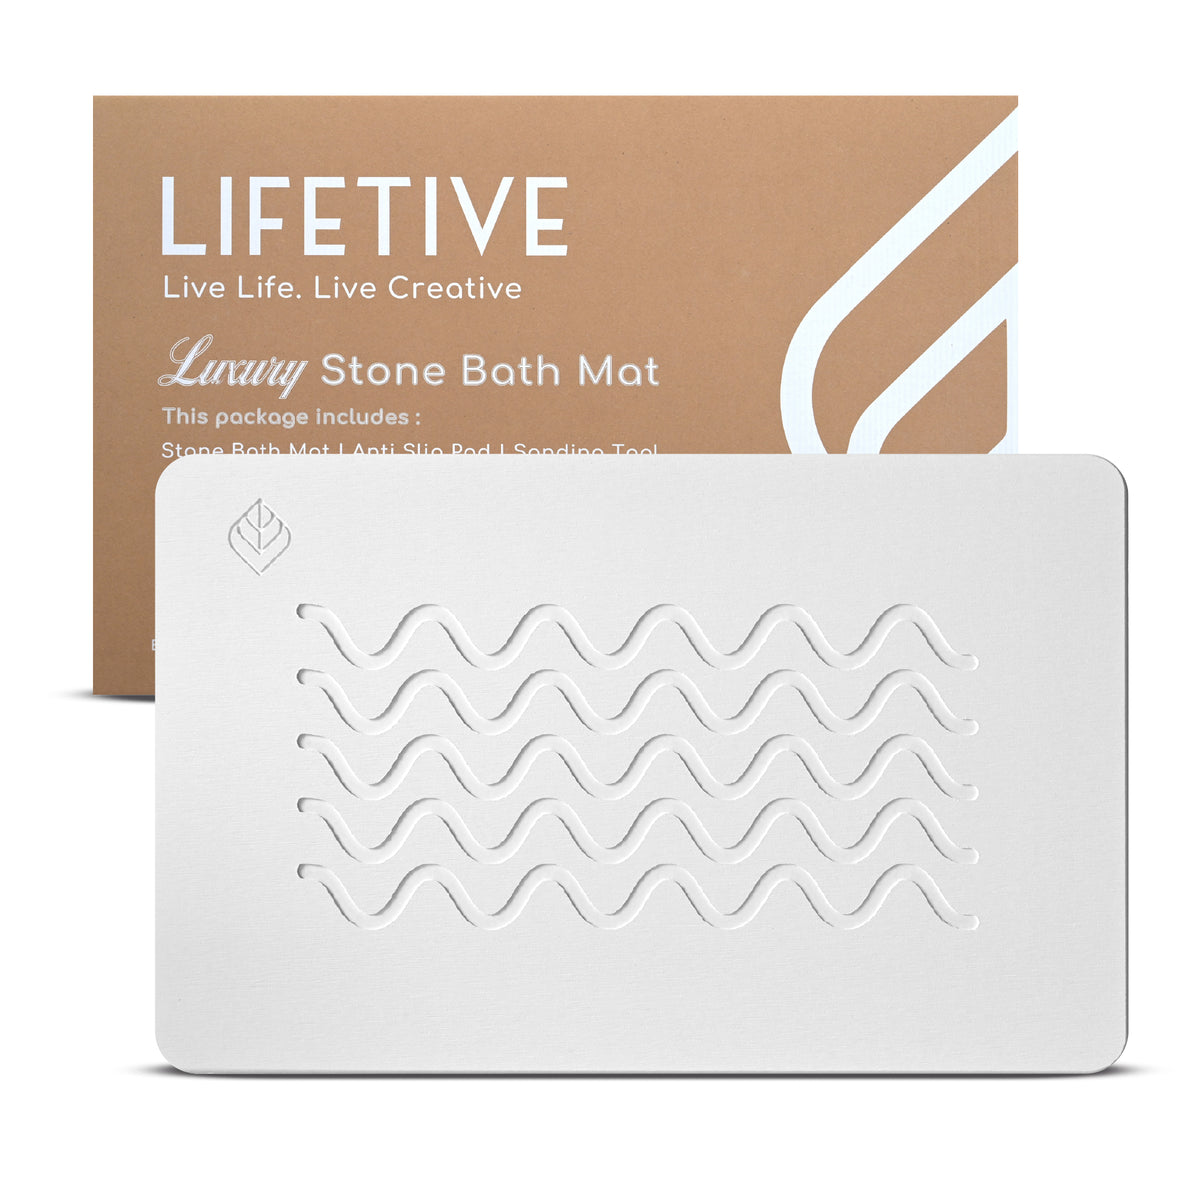 Lifetive Stone Bath Mat - Water